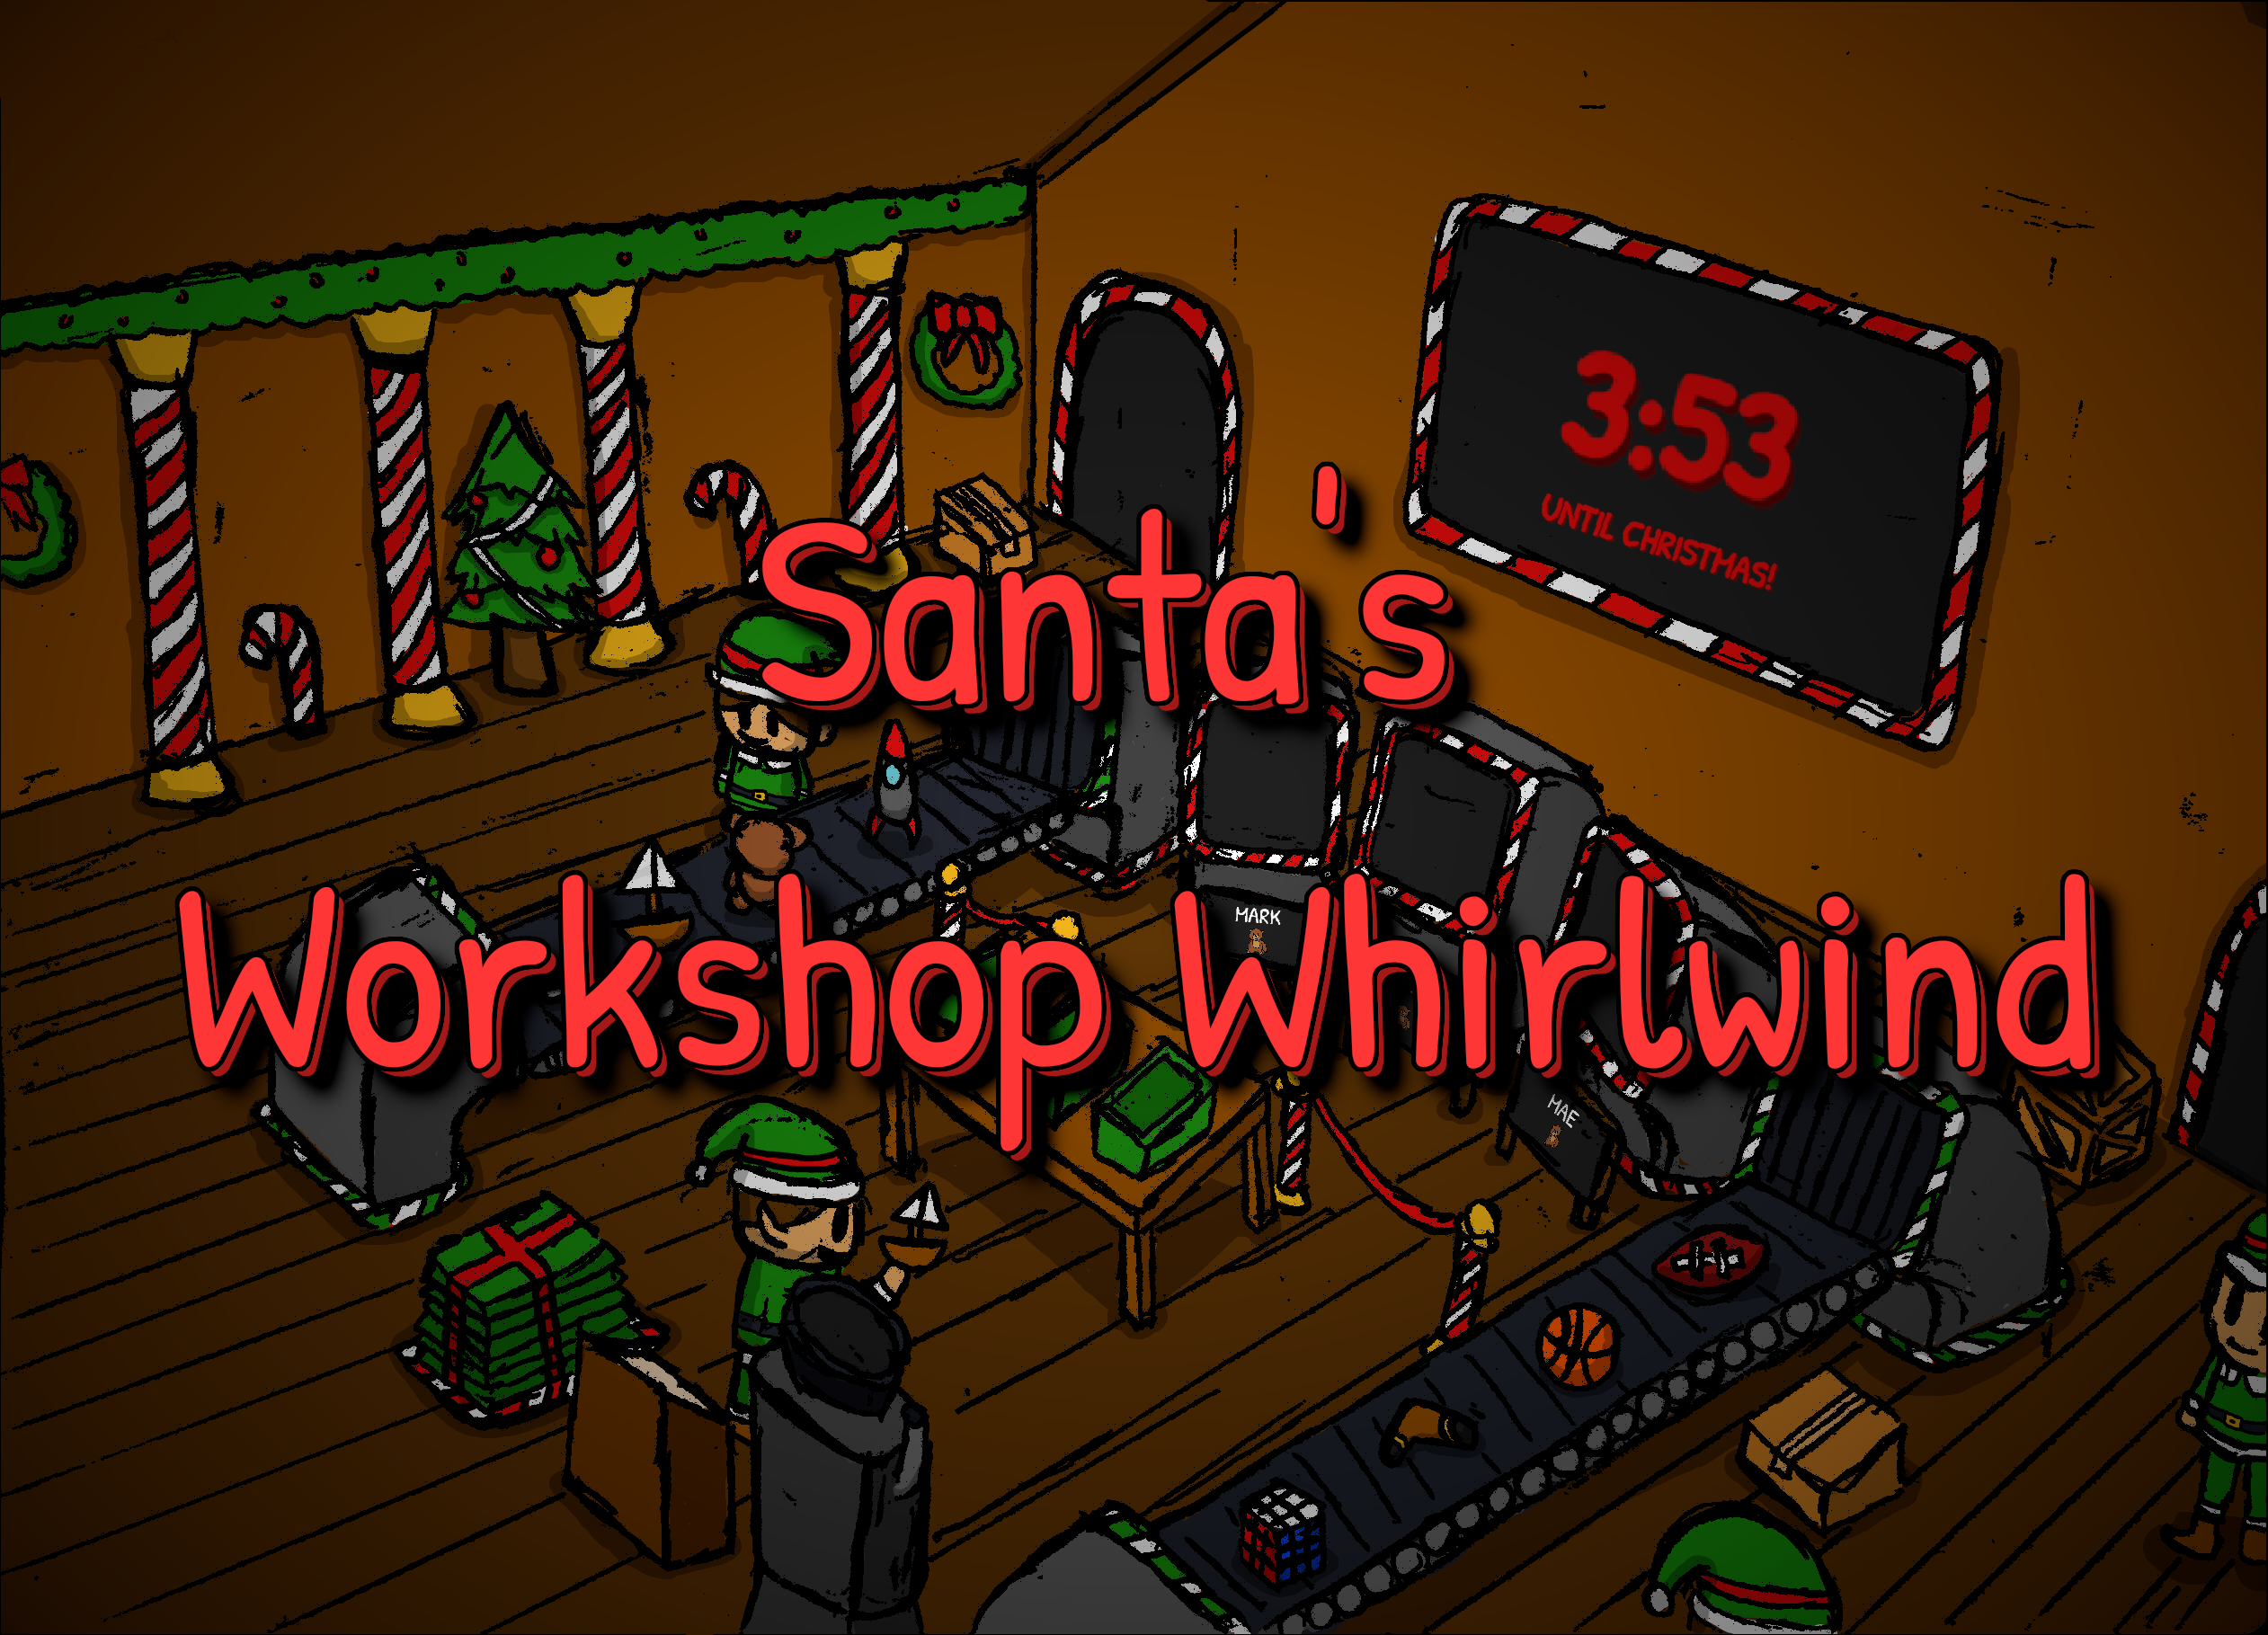 Santa's Workshop Whirlwind